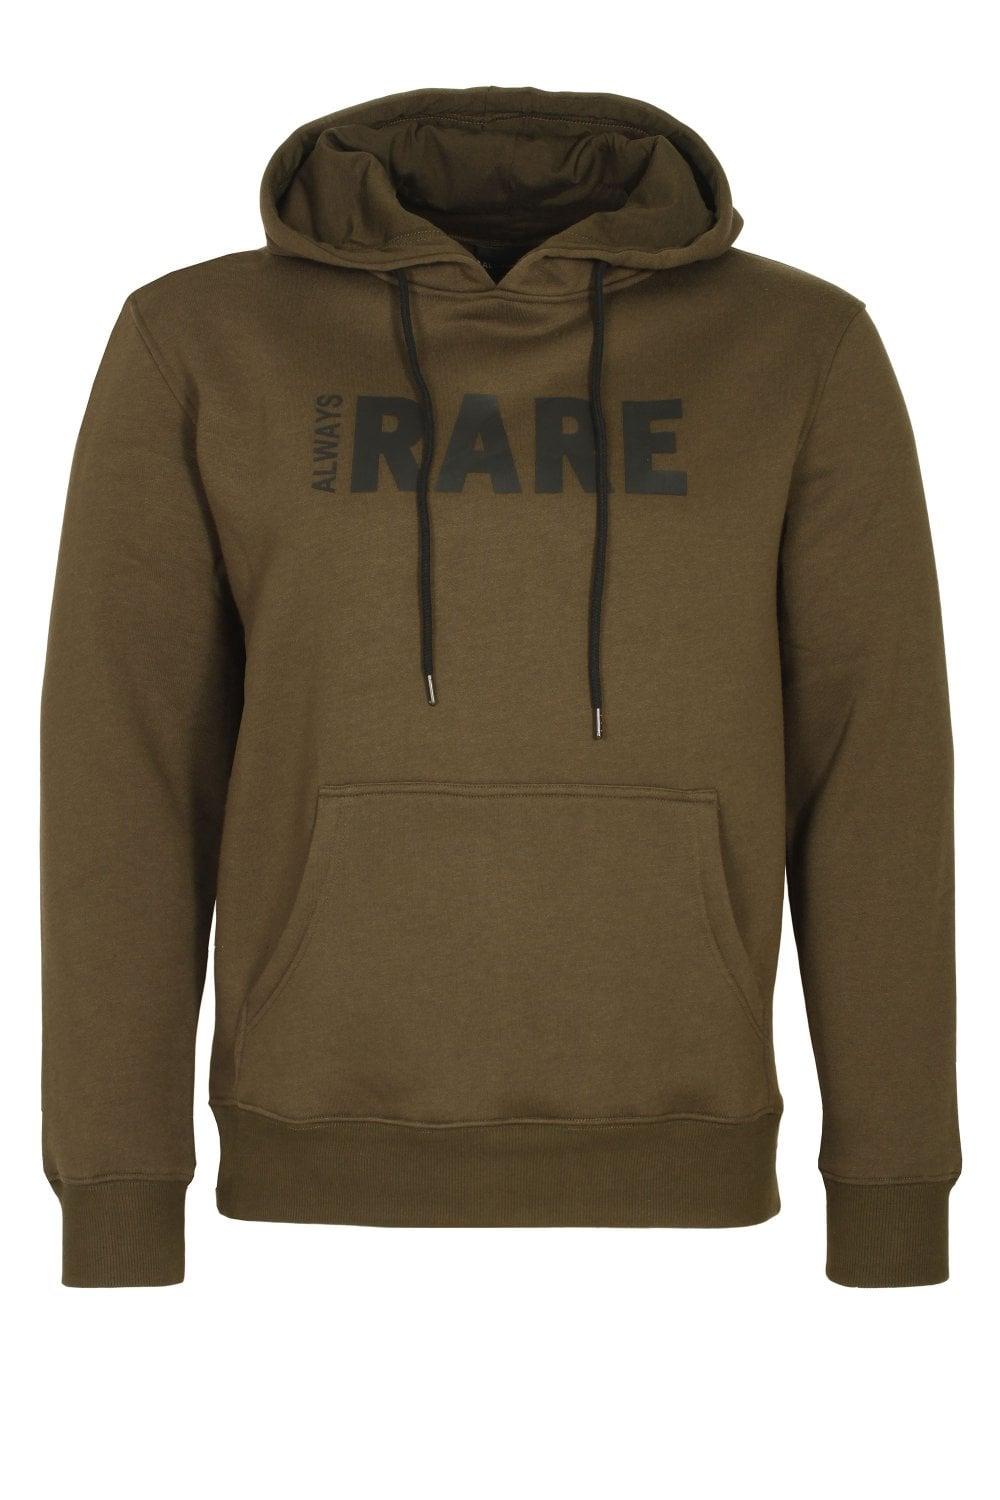 Rare Clothing Logo - Always Rare OTH Mens Logo Hoodie